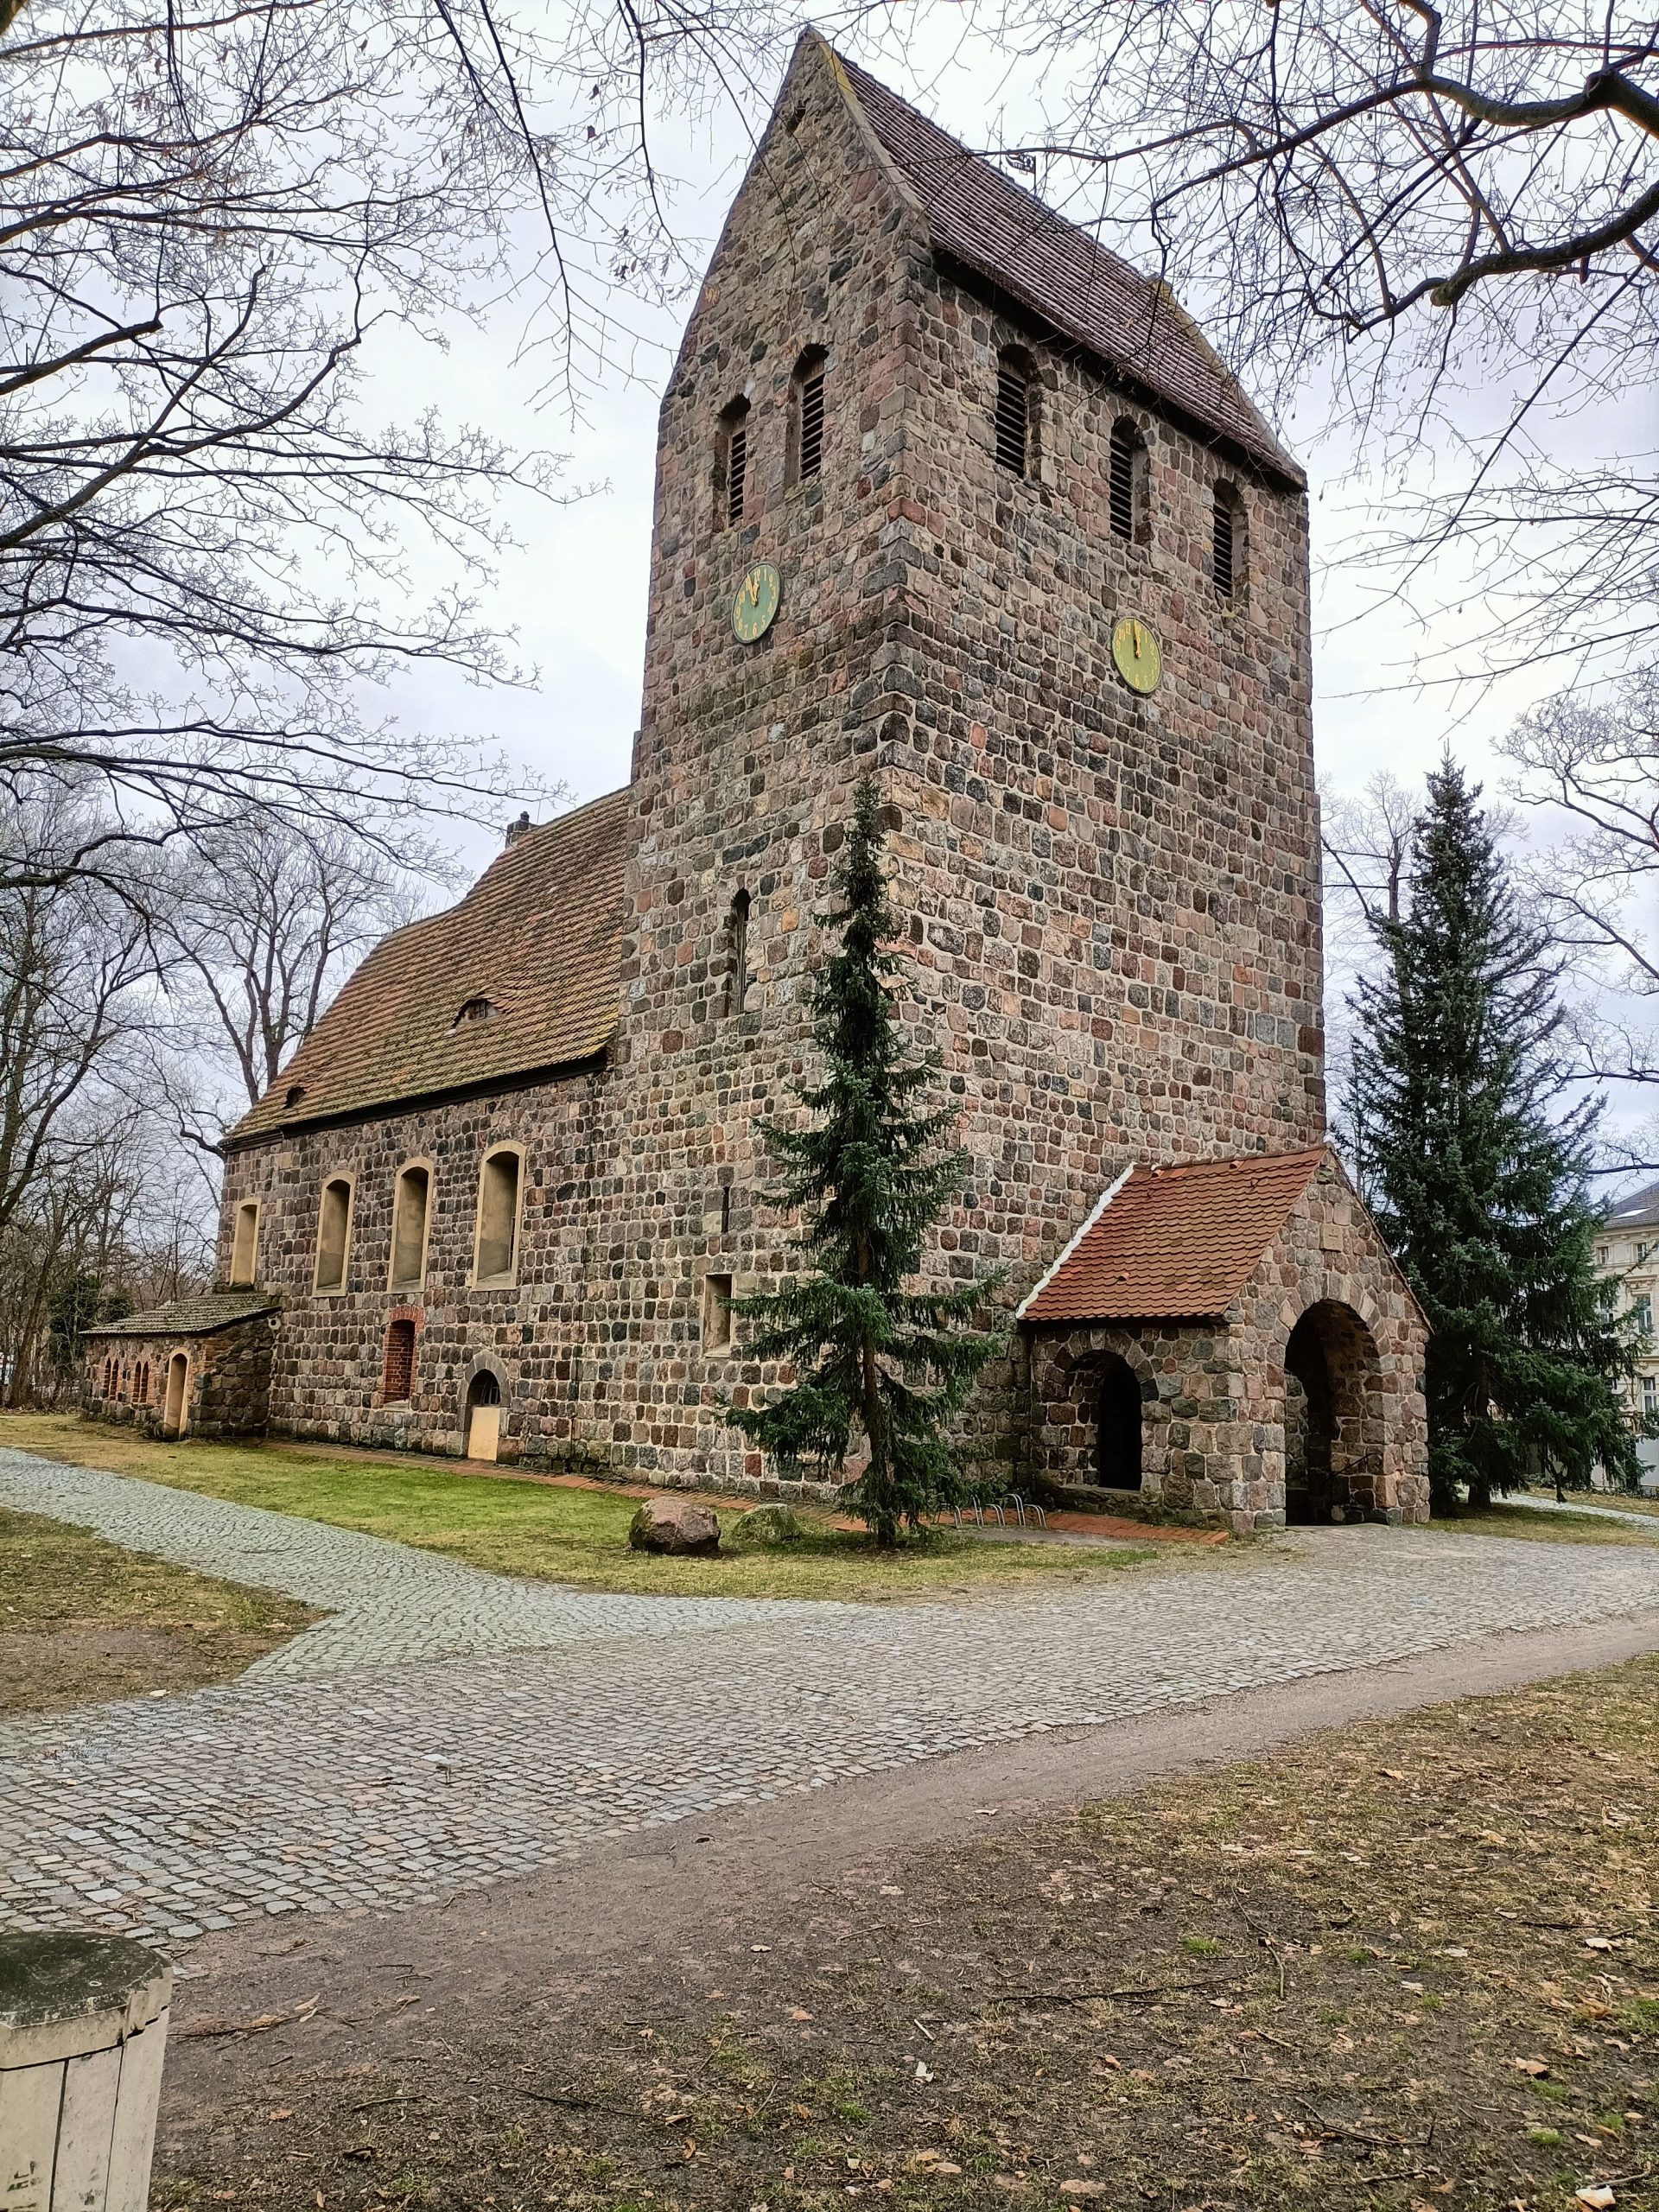 BezirksTOUR: Alt-Marienfelde – gegründet von den Tempelrittern